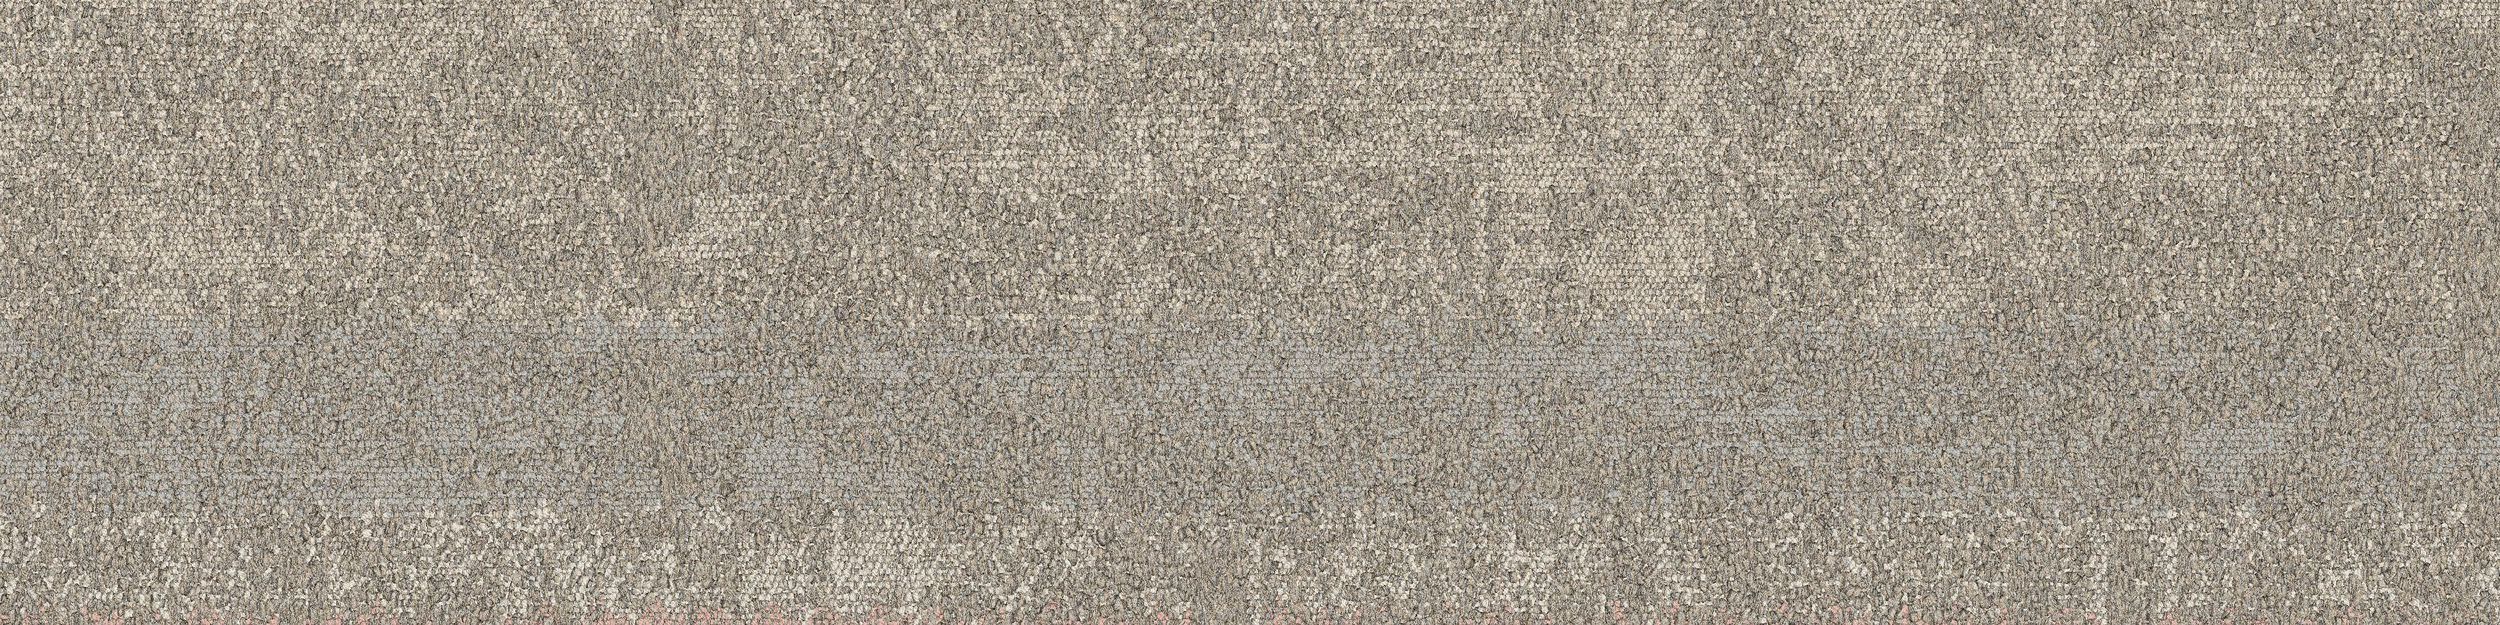 Up At Dawn Carpet Tile In Rhodium numéro d’image 2